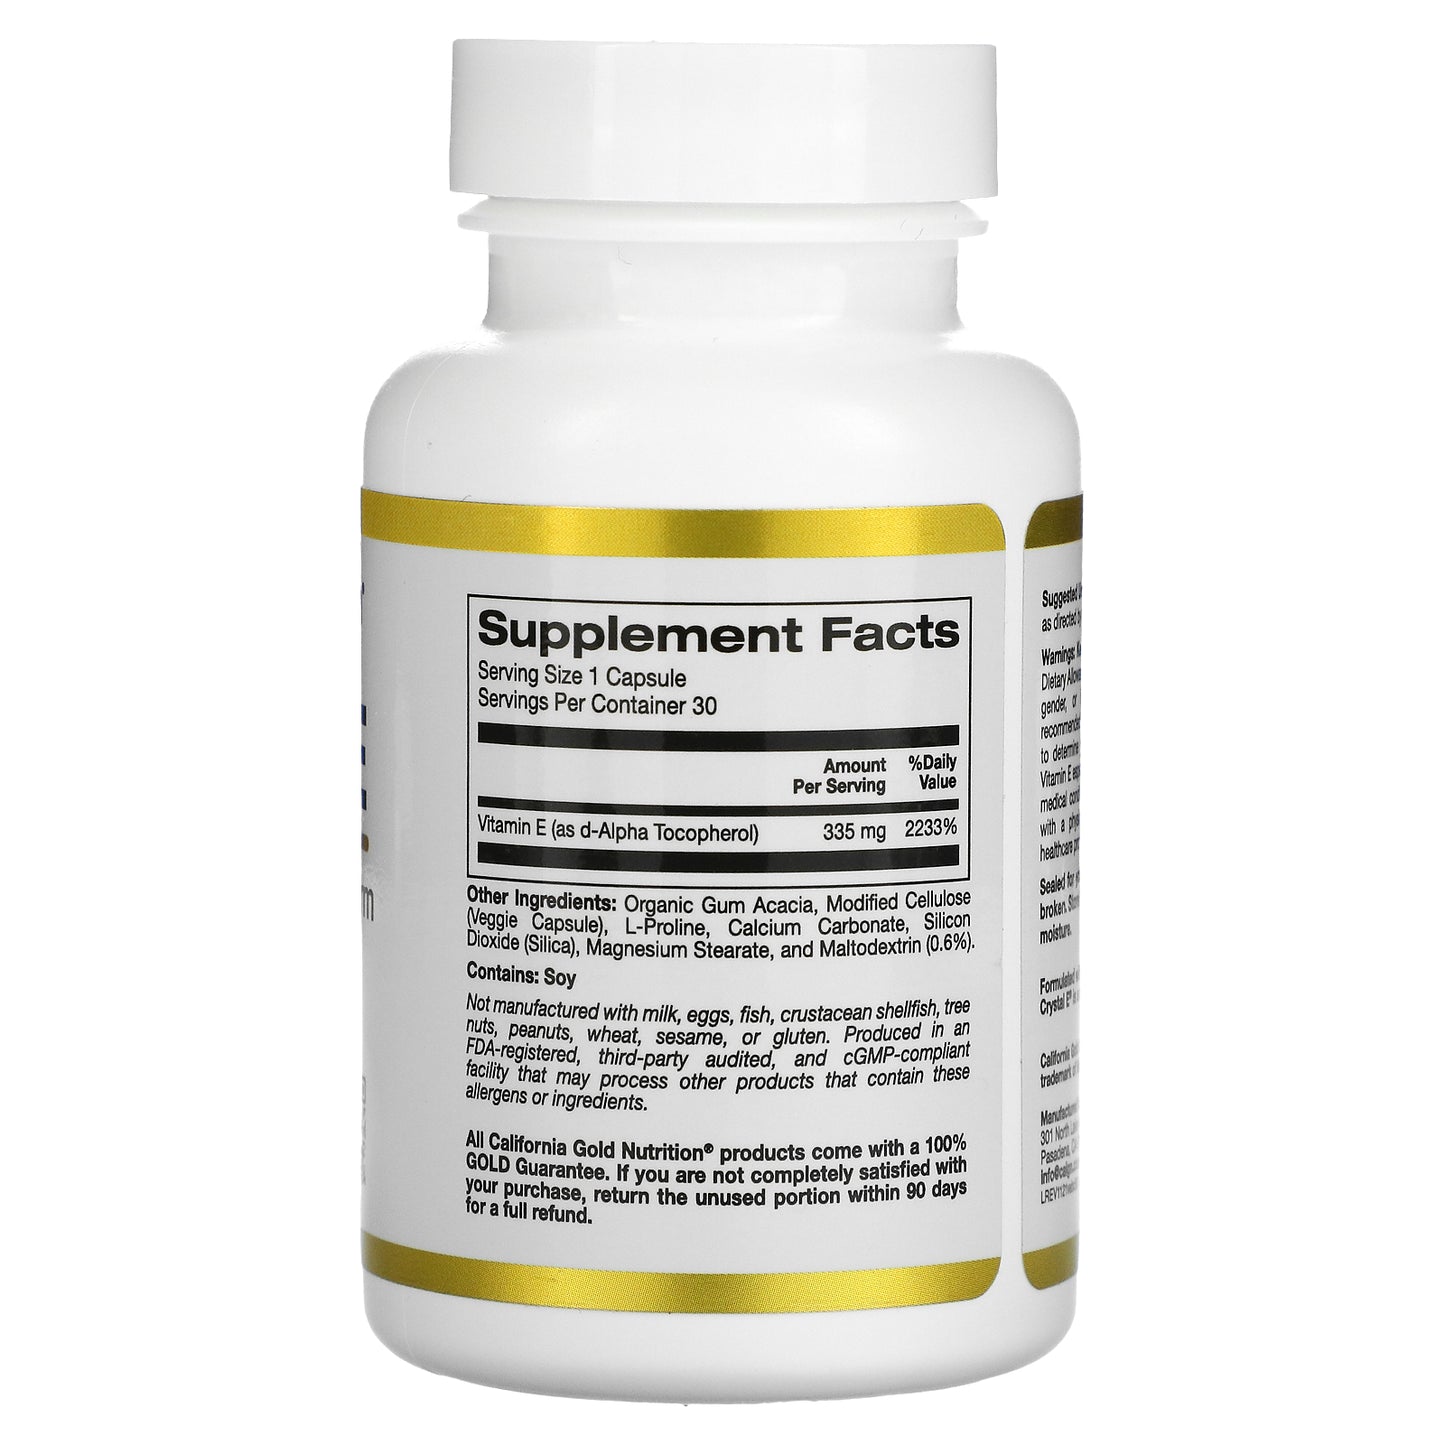 California Gold Nutrition, Bioactive Vitamin E, 335 mg (500 IU), 30 Veggie Capsules